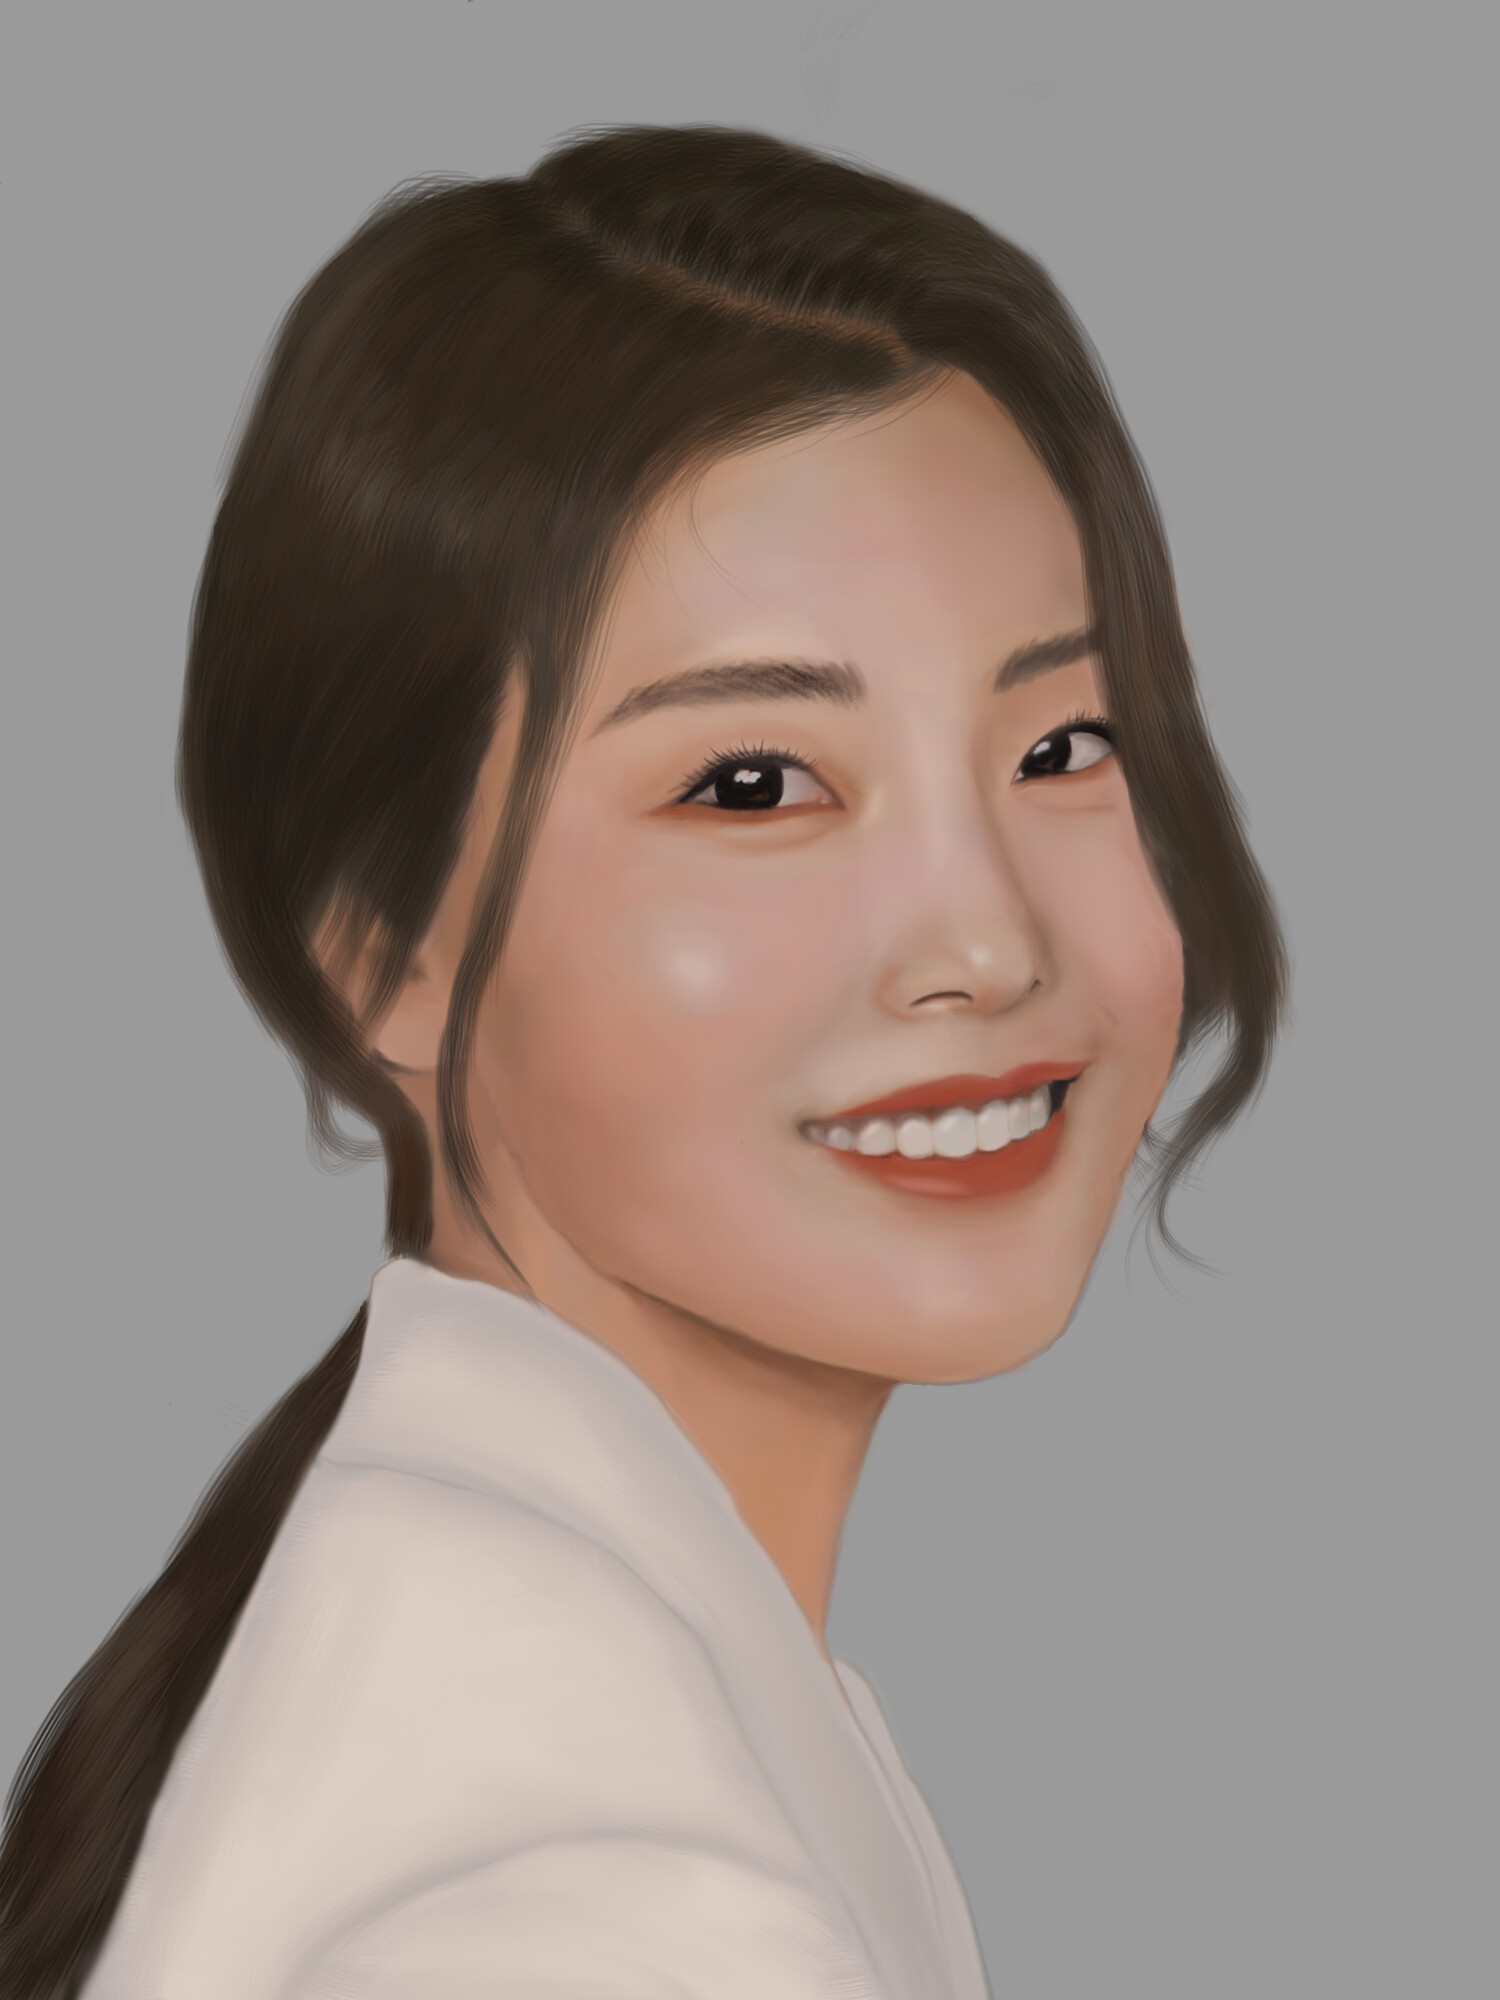 ArtStation - Kang So Yeon portrait